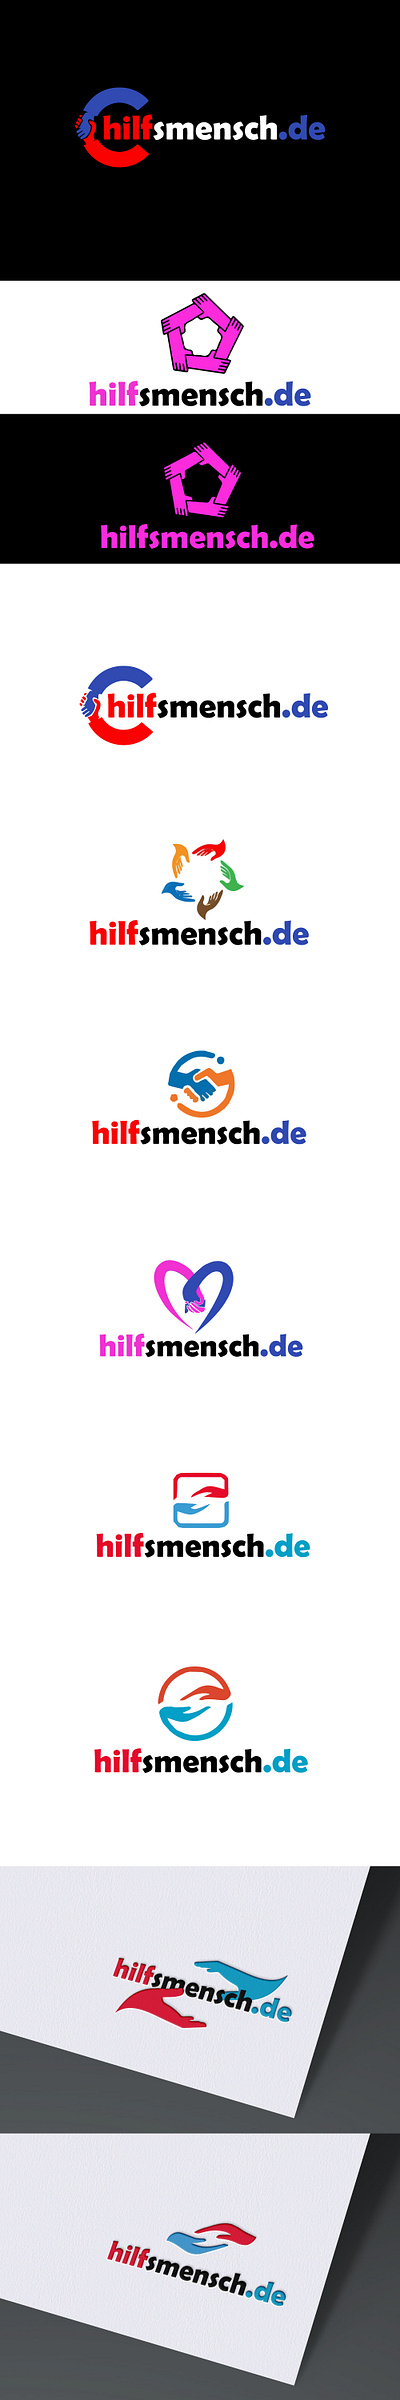 Hilf Smensch.de LOGO brand icon design brand logo brand mark branding business logo design design graphic design illustration illustrator logo logo creator minimalist logo design typography logo design vector